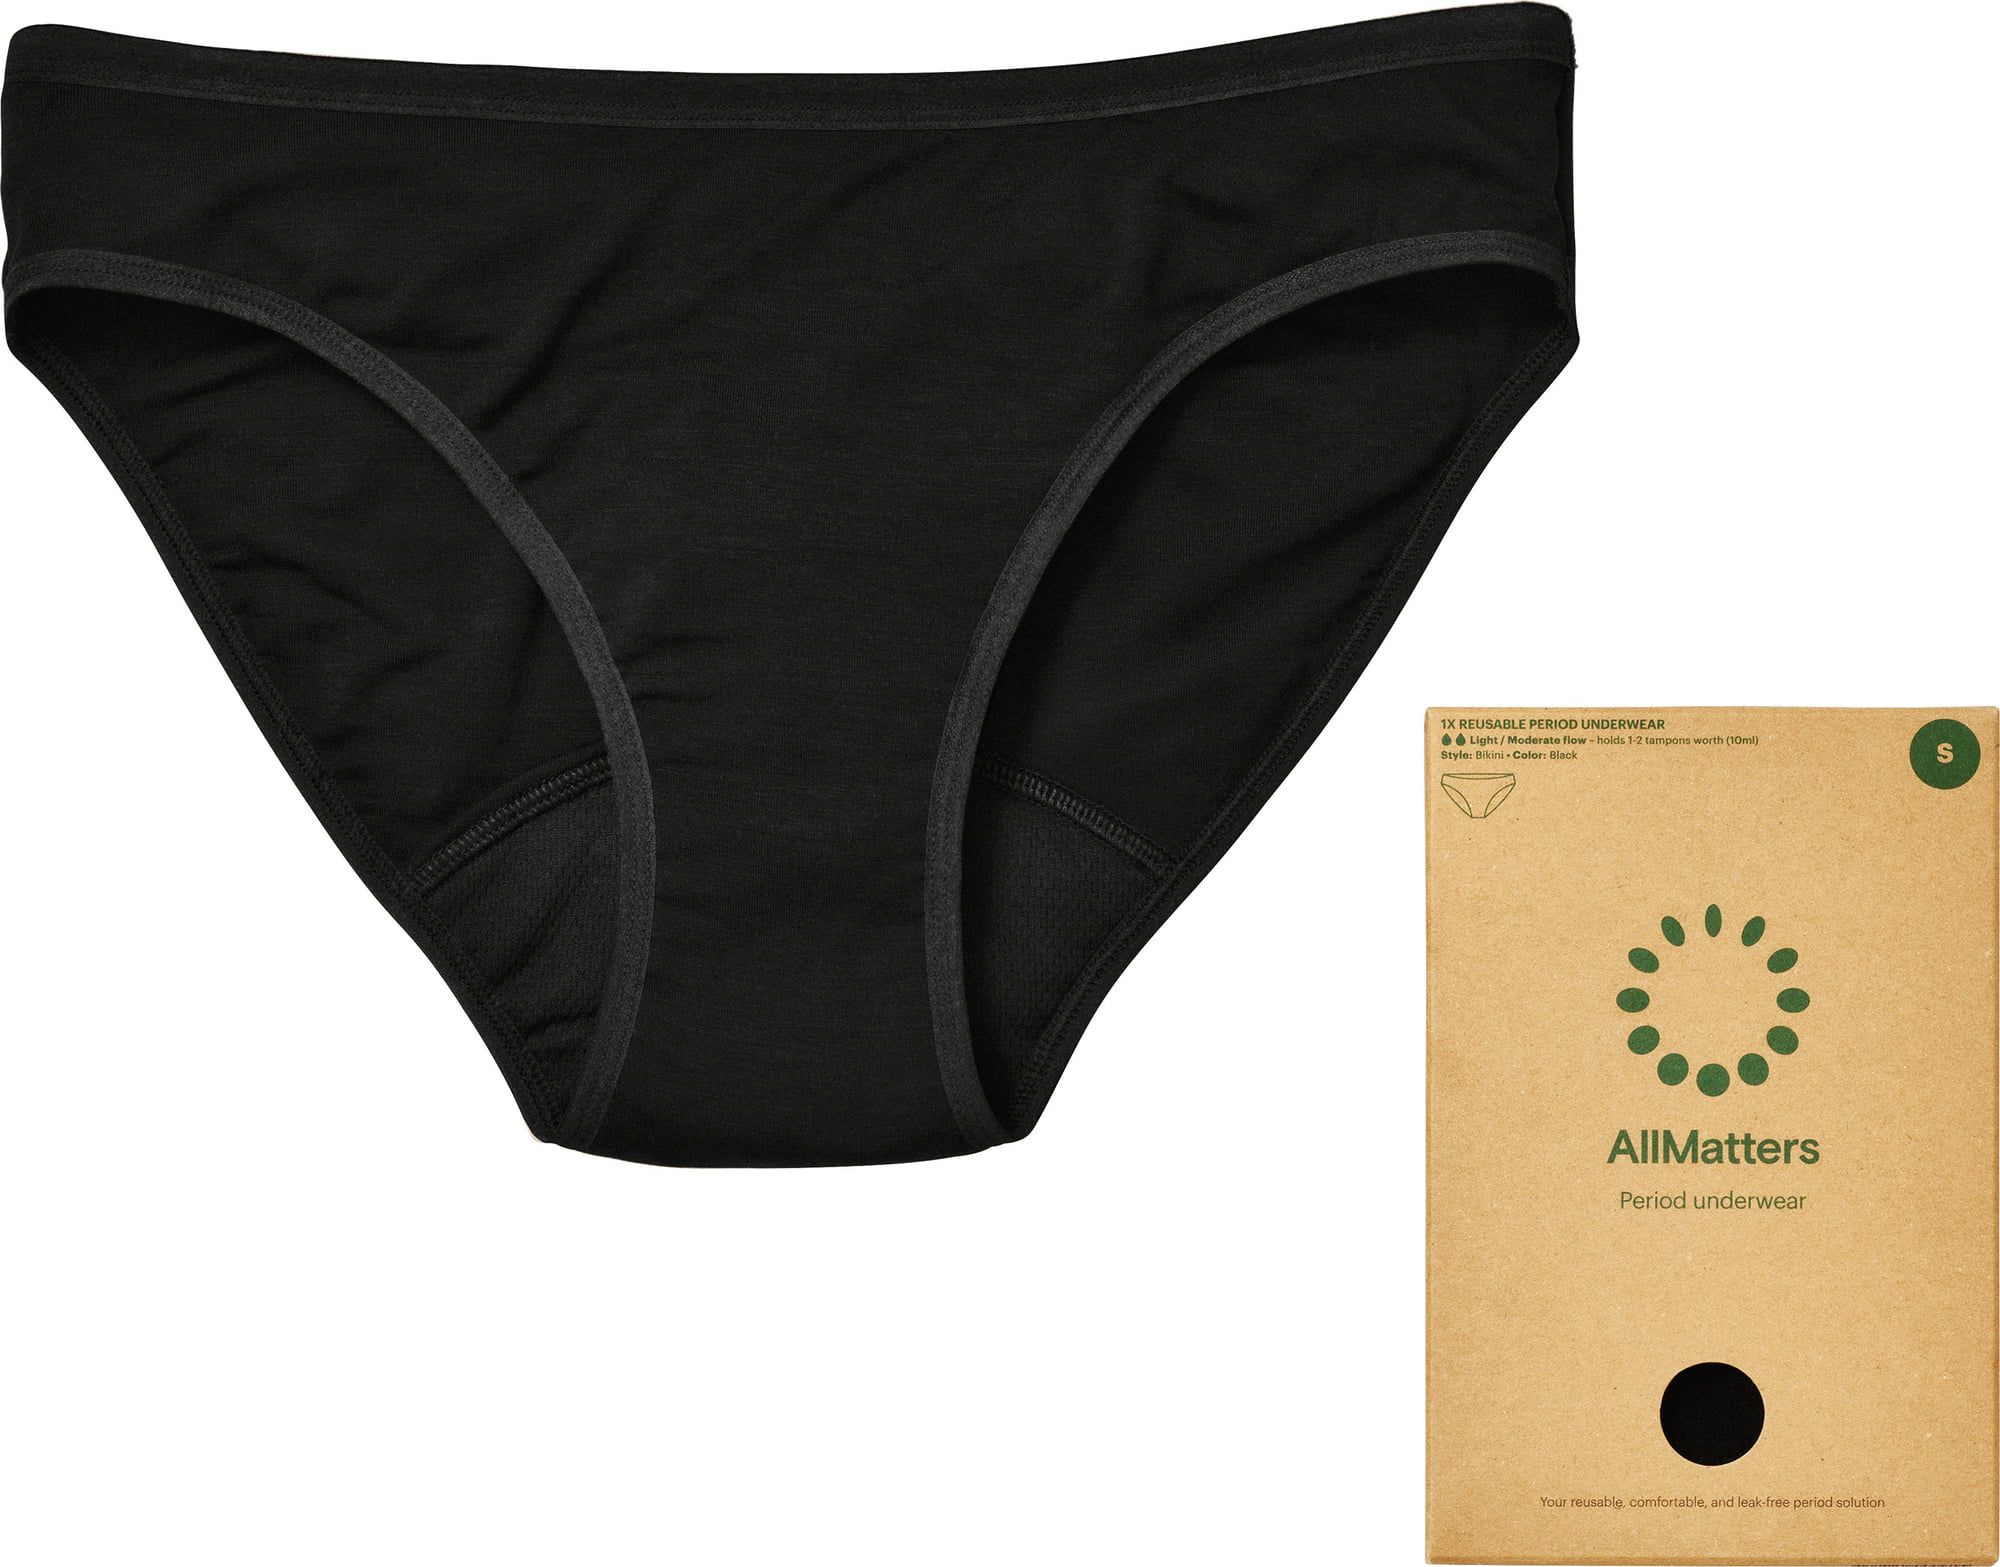 https://ec.nice-cdn.com/upload/image/product/large/default/allmatters-period-underwear-black-1703919-en.jpg